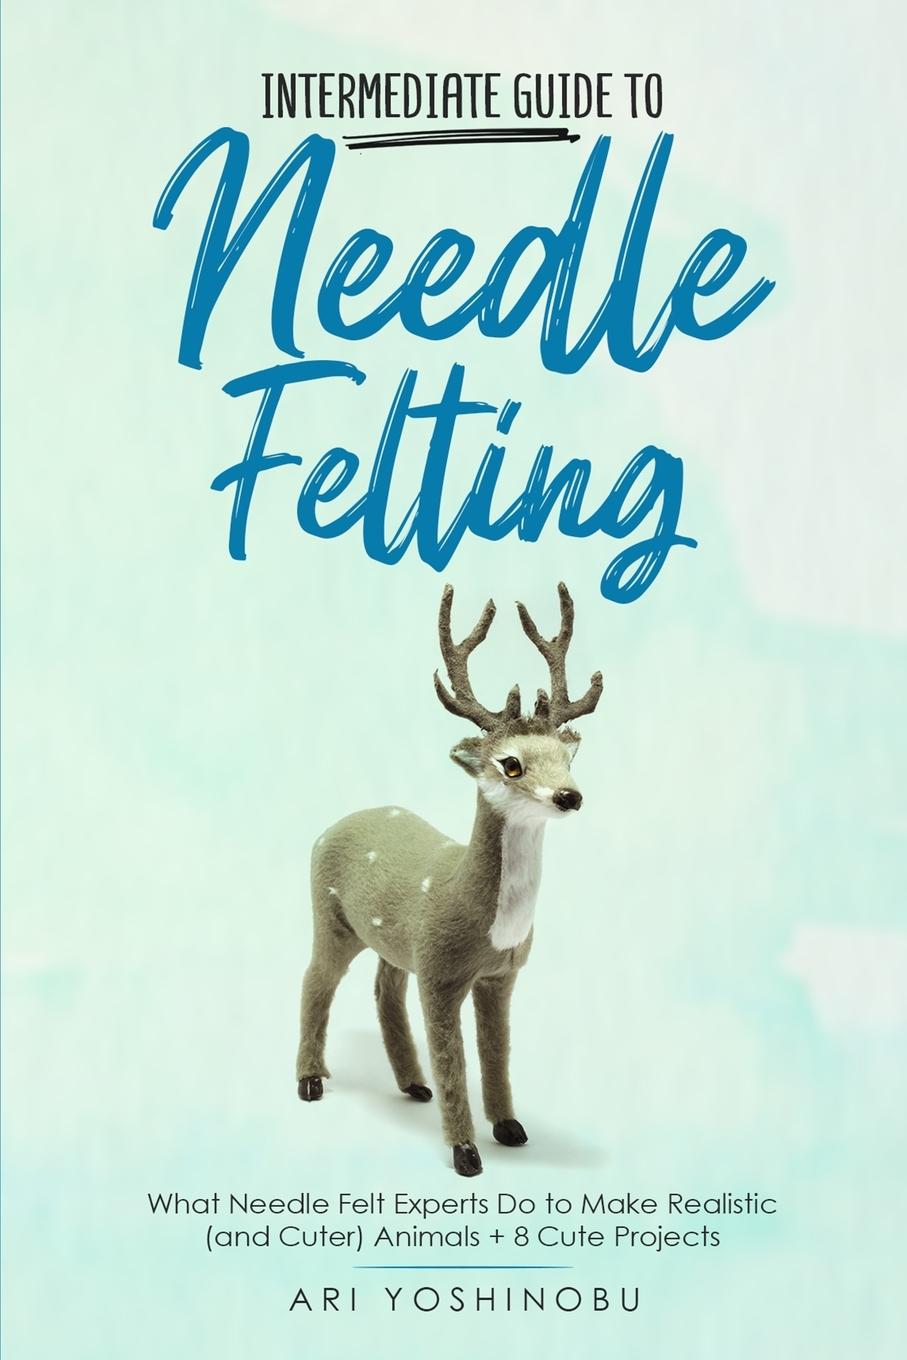 Knjiga Intermediate Guide to Needle Felting 